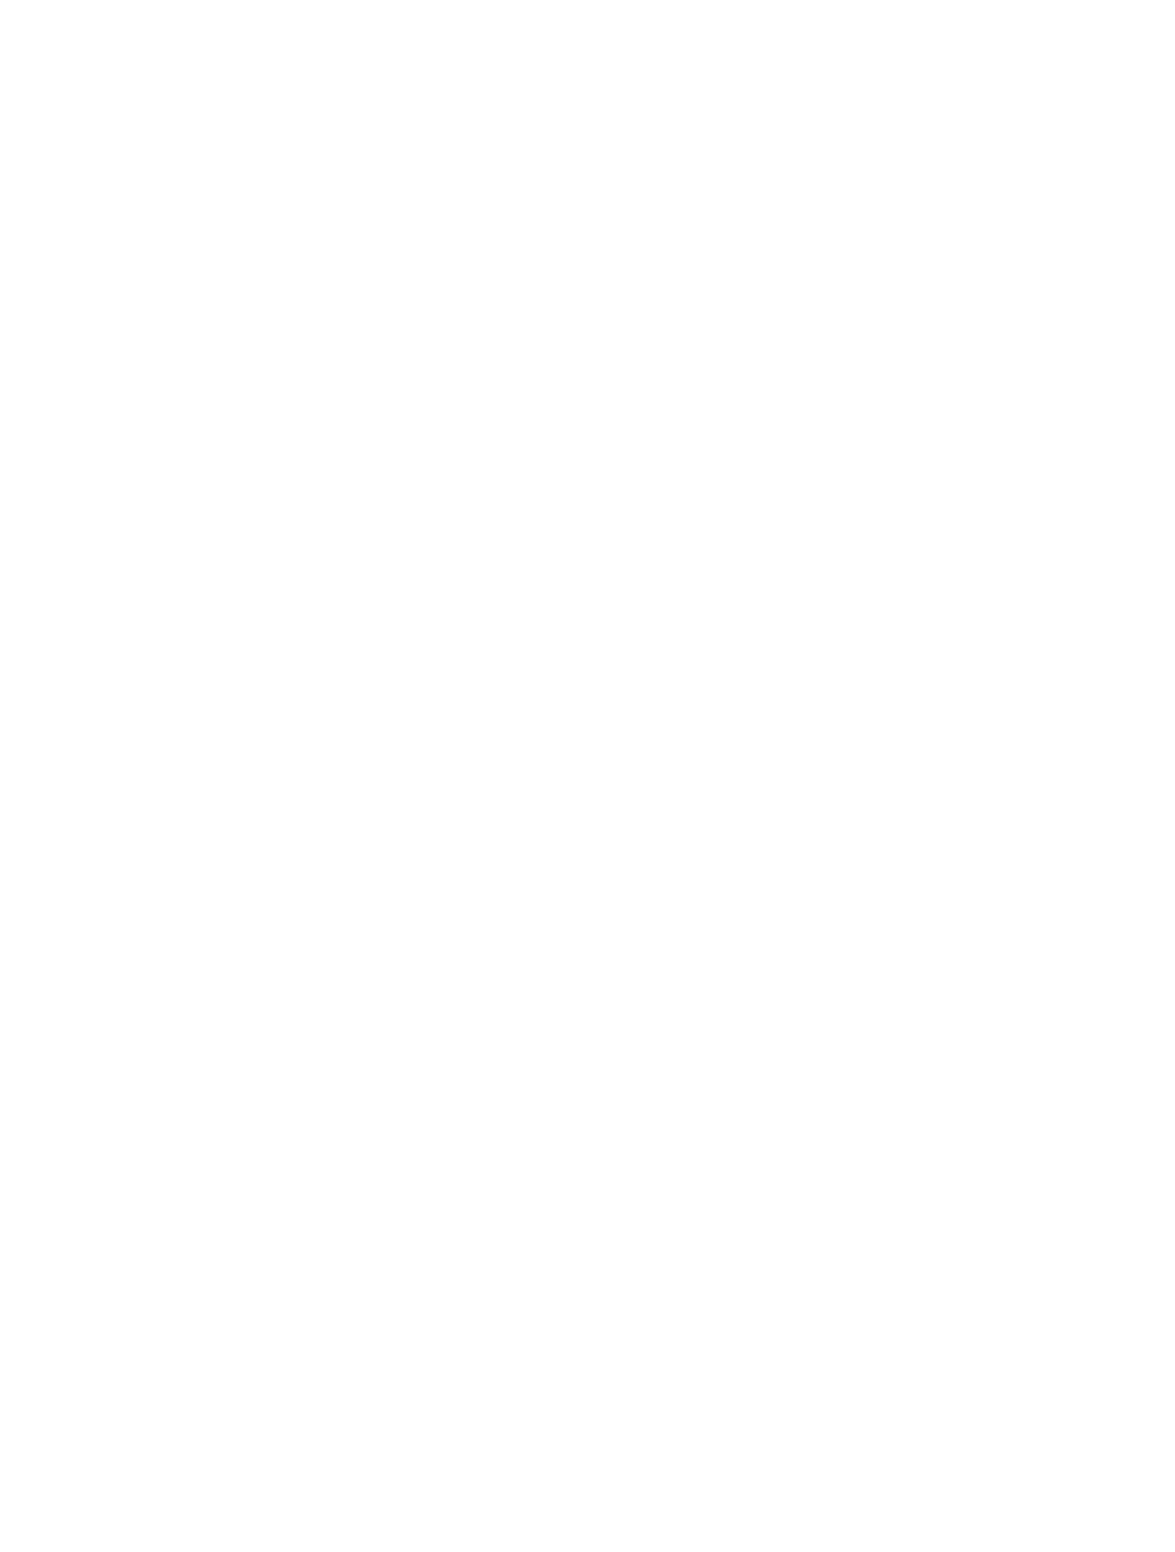 Aeterna Zentaris logo for dark backgrounds (transparent PNG)